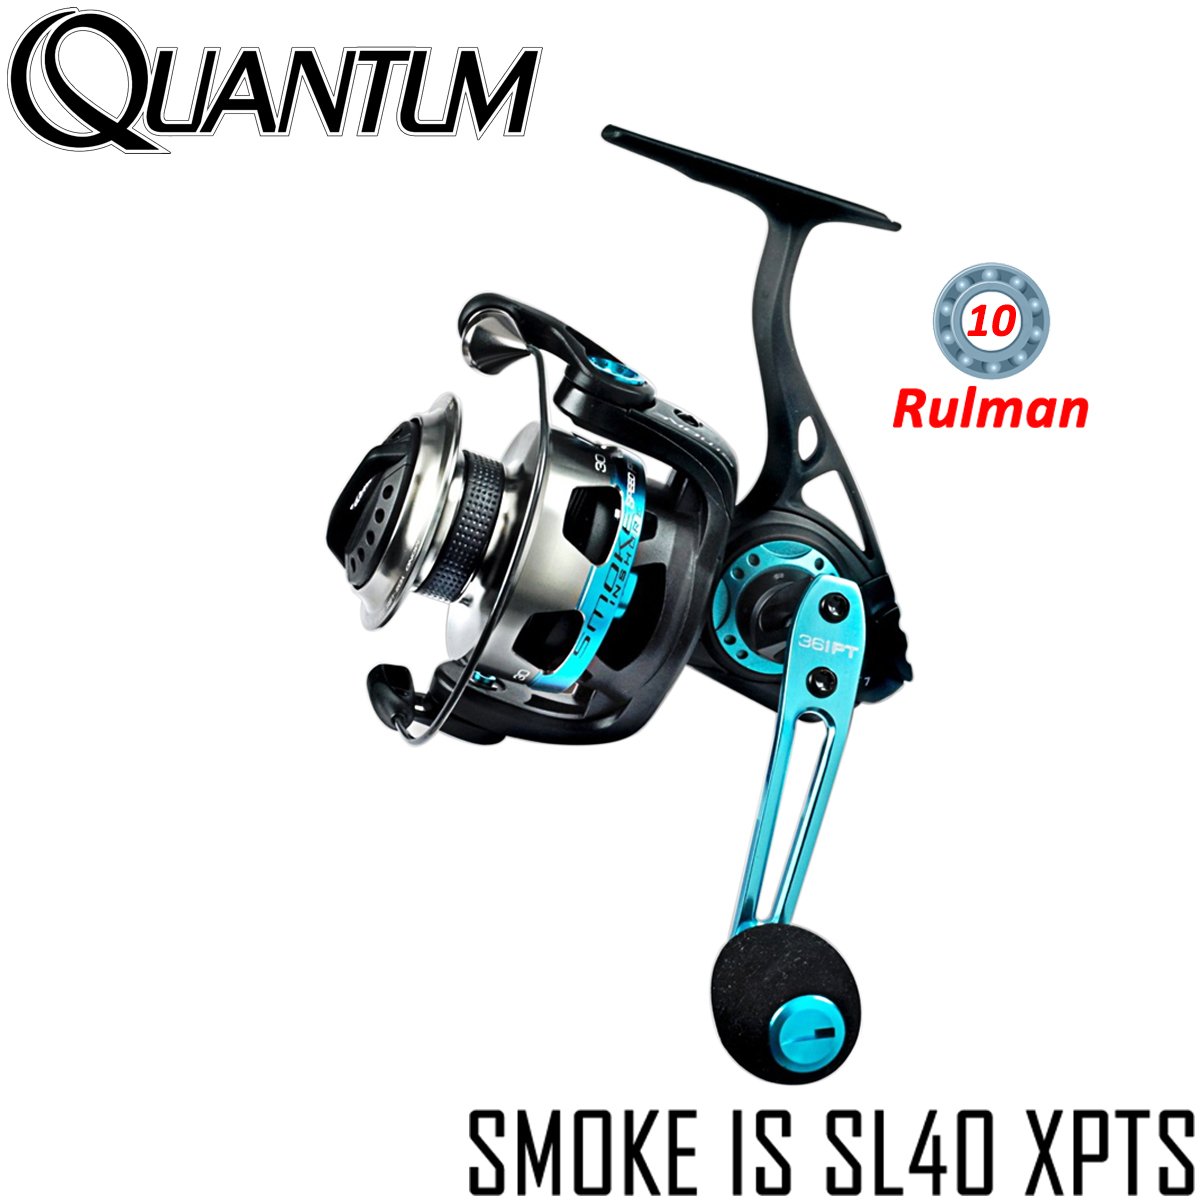 Quantum ''IS SMOKE SL40 XPTS '' Olta Makinesi